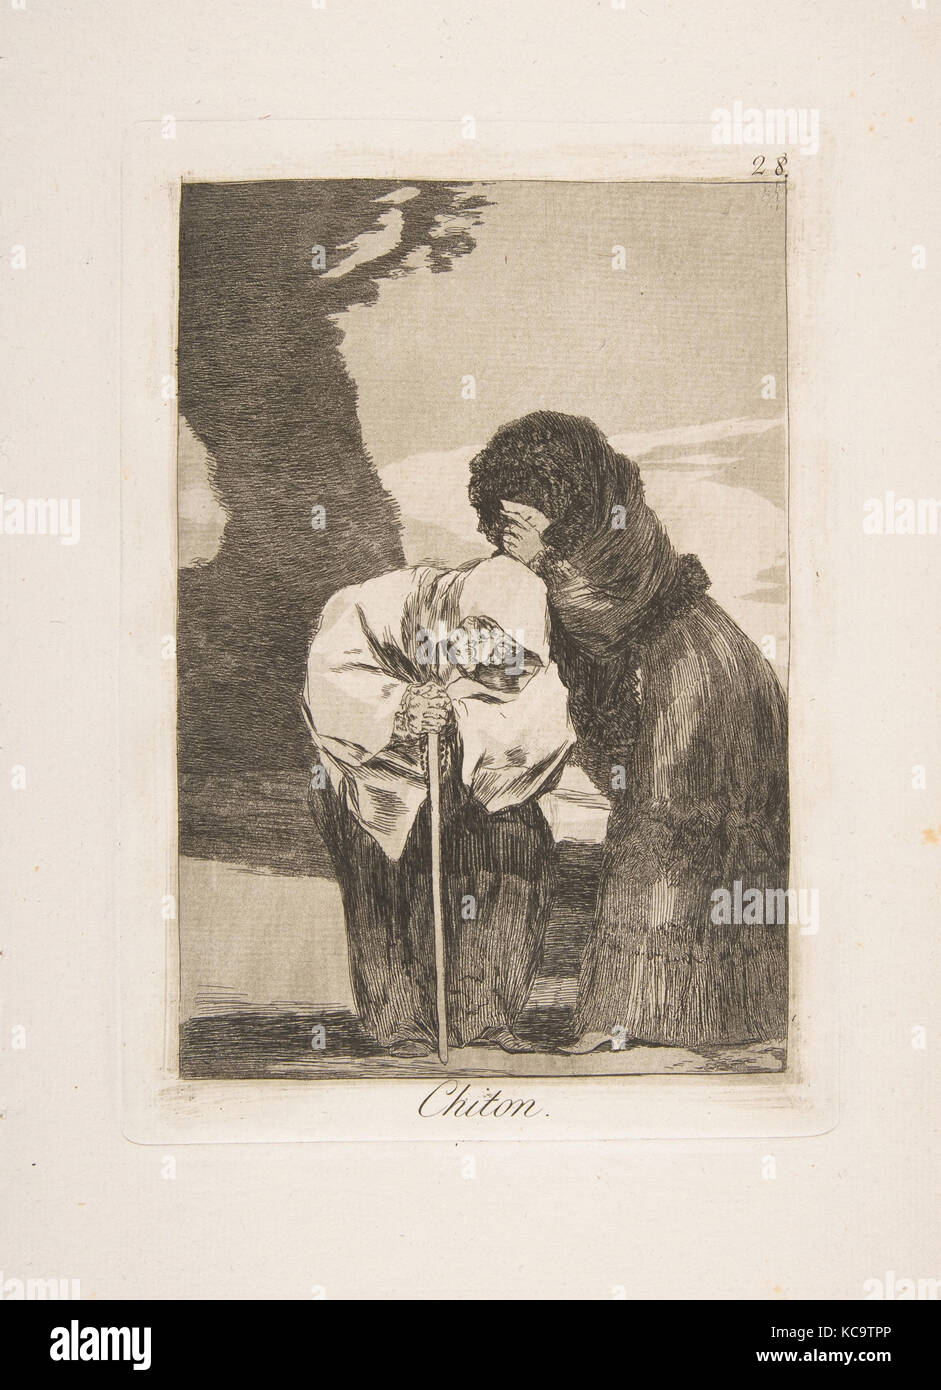 Plate 28 from 'Los Caprichos': Hush (Chiton.), Goya, 1799 Stock Photo